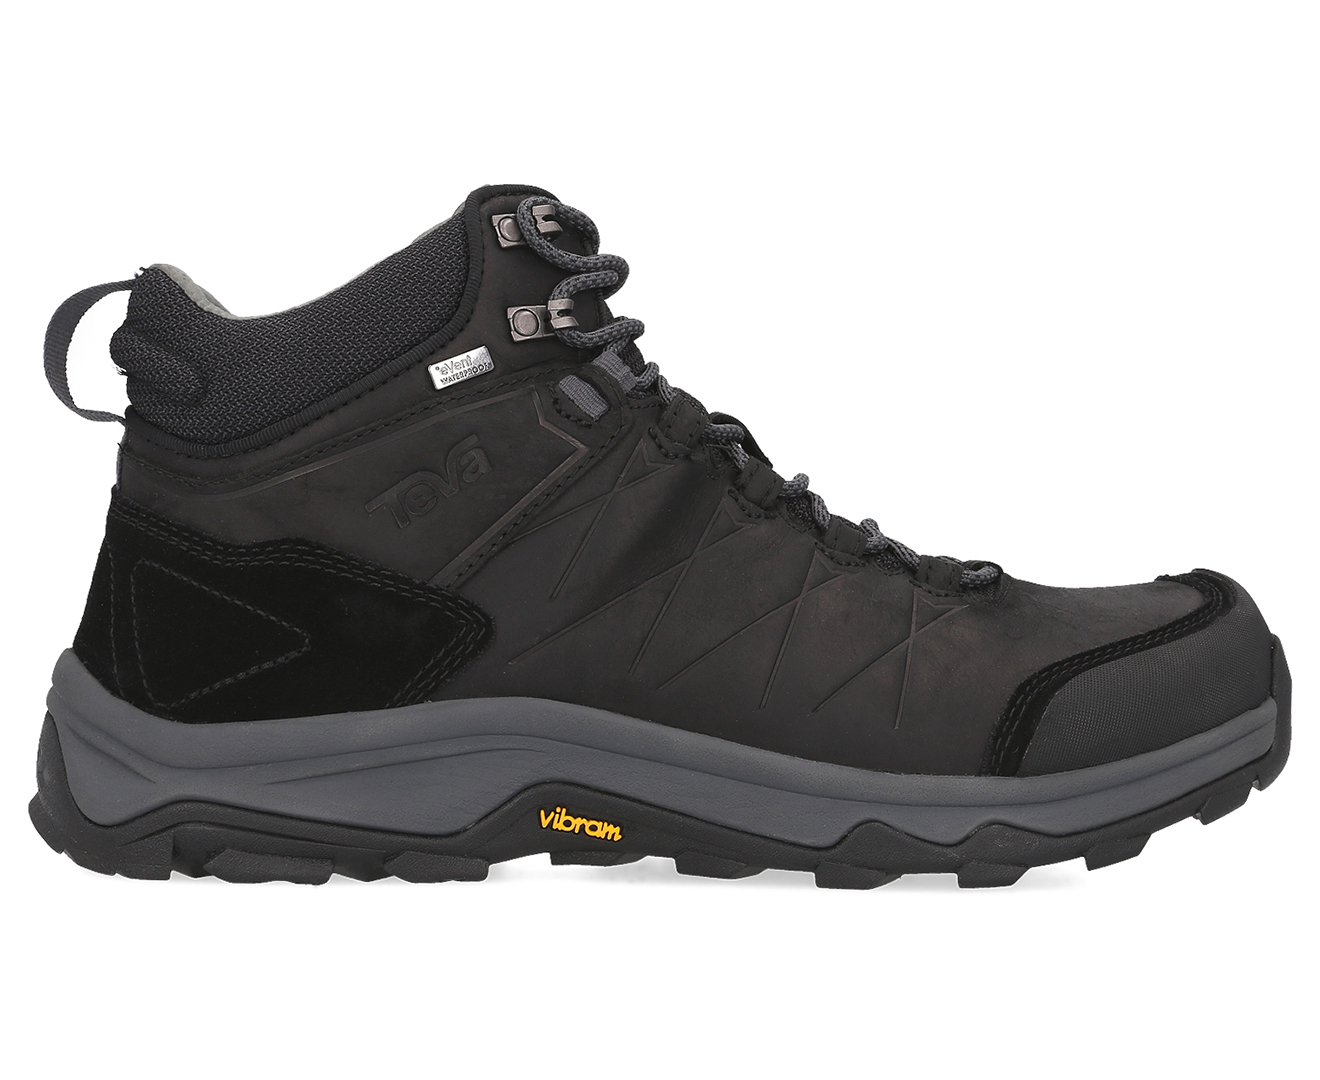 Teva Men's Arrowood Riva Mid Waterproof Hiking Boots - Black | Catch.com.au